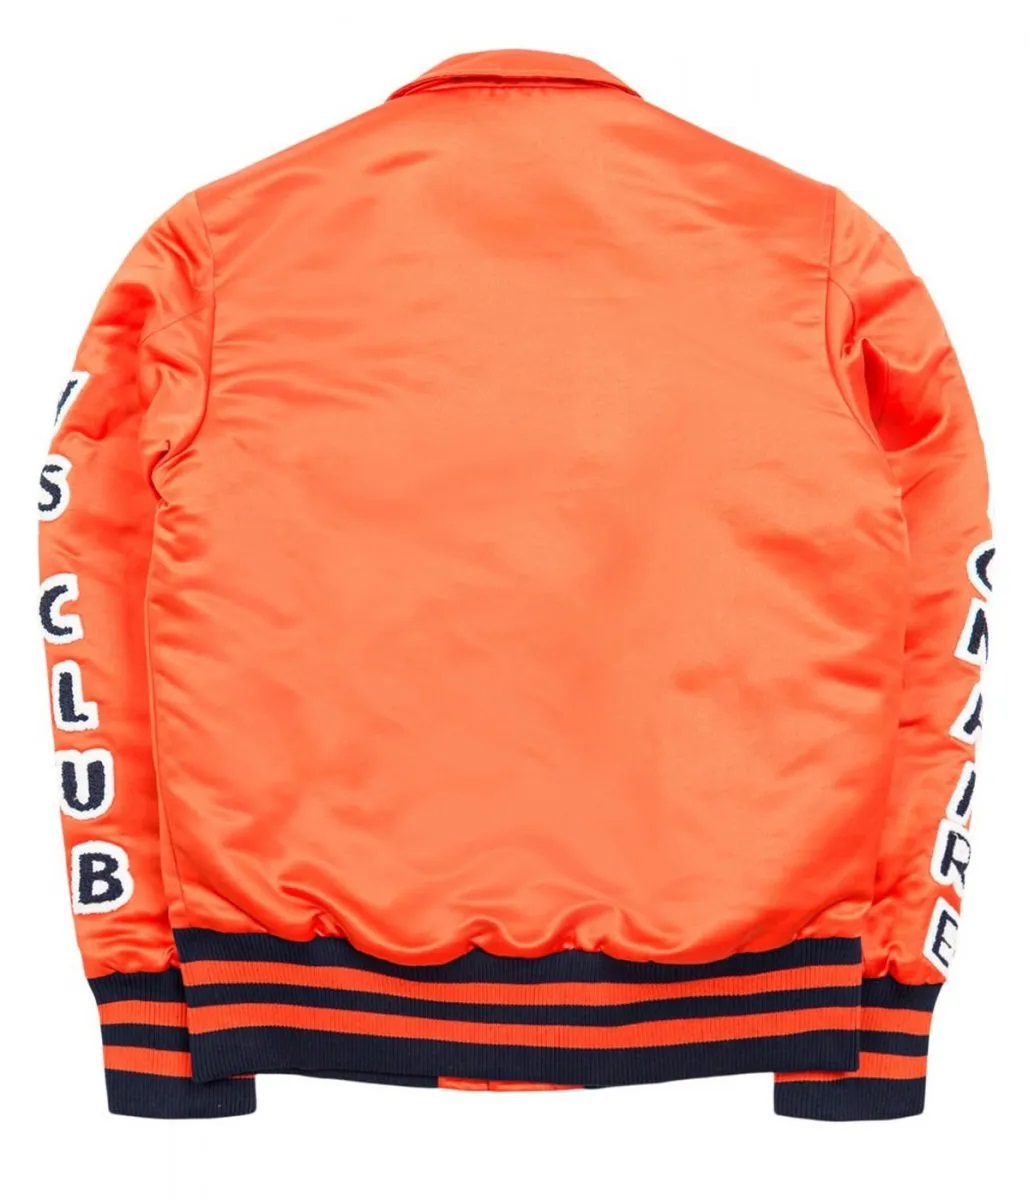 Billionaire Boys Club Astro Classic Satin Orange Jacket